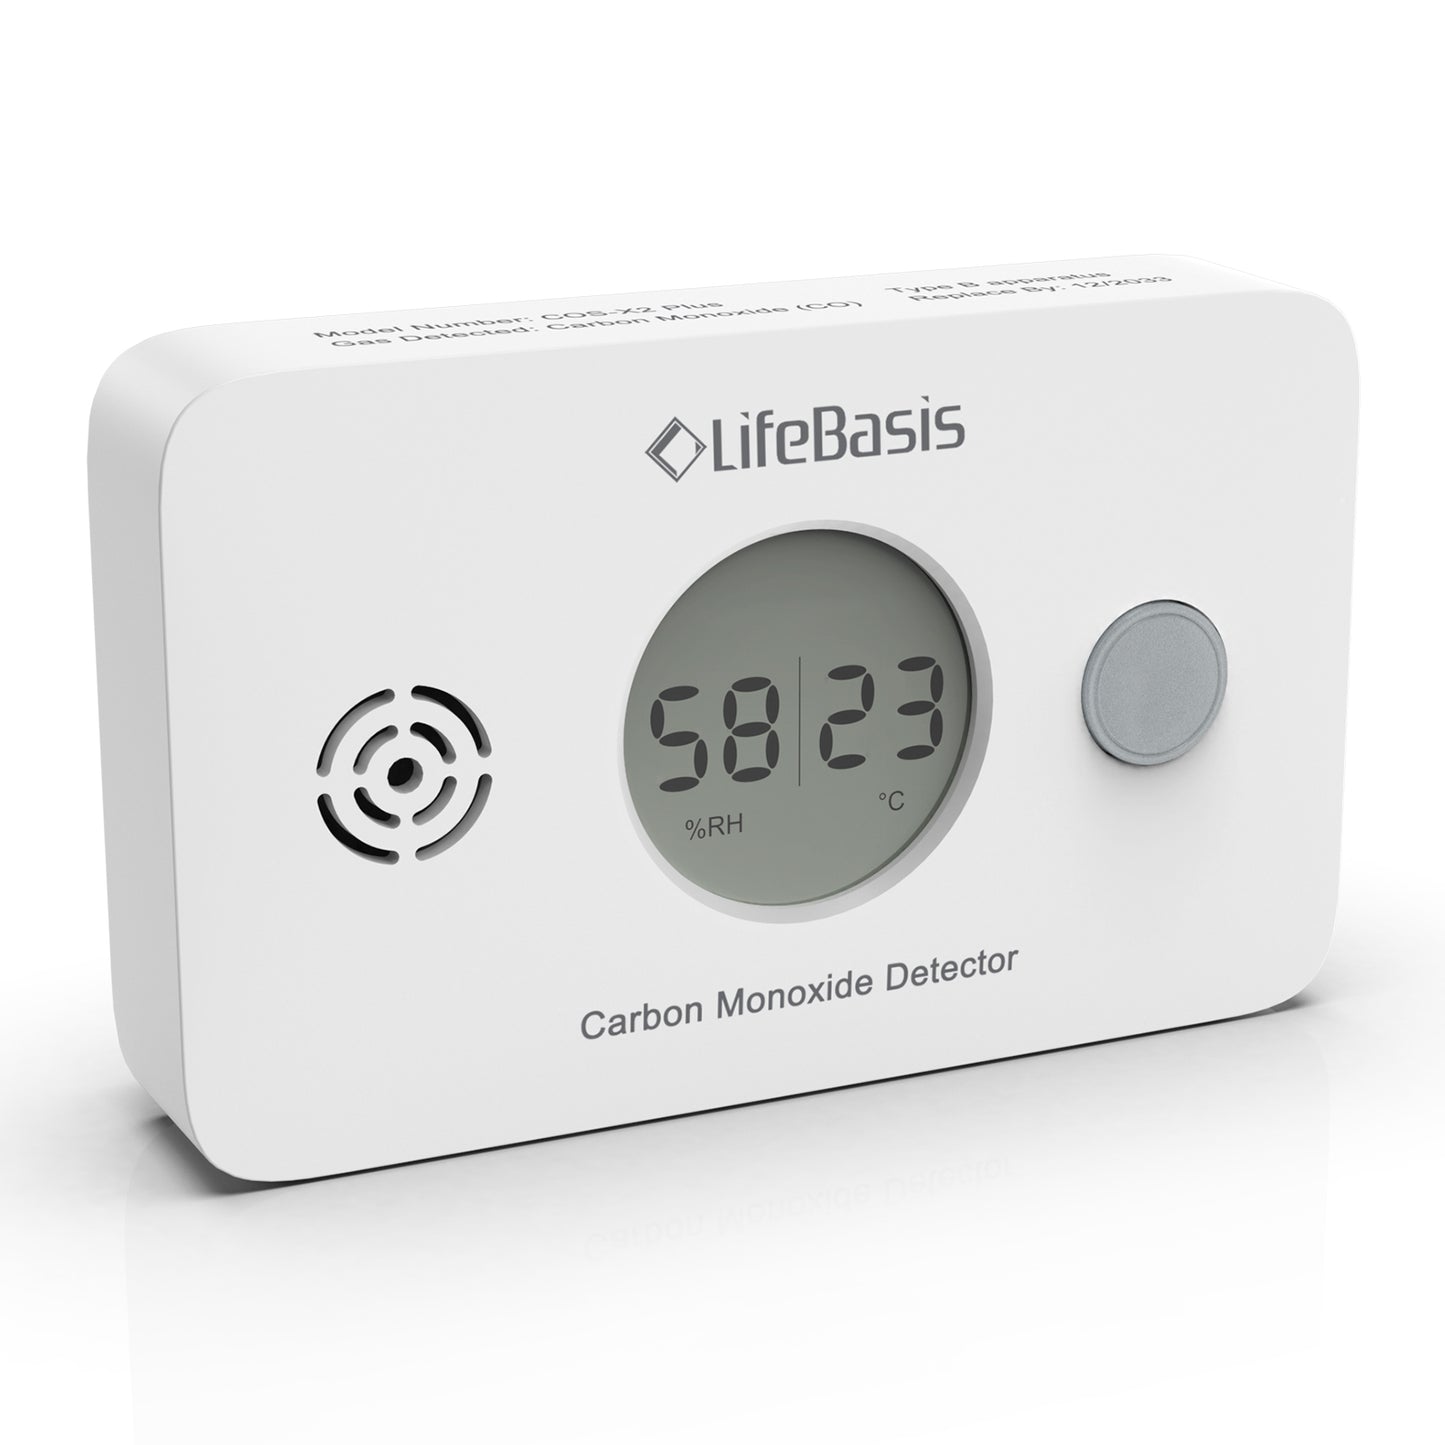 LifeBasis 3 in 1 Carbon Monoxide Detector